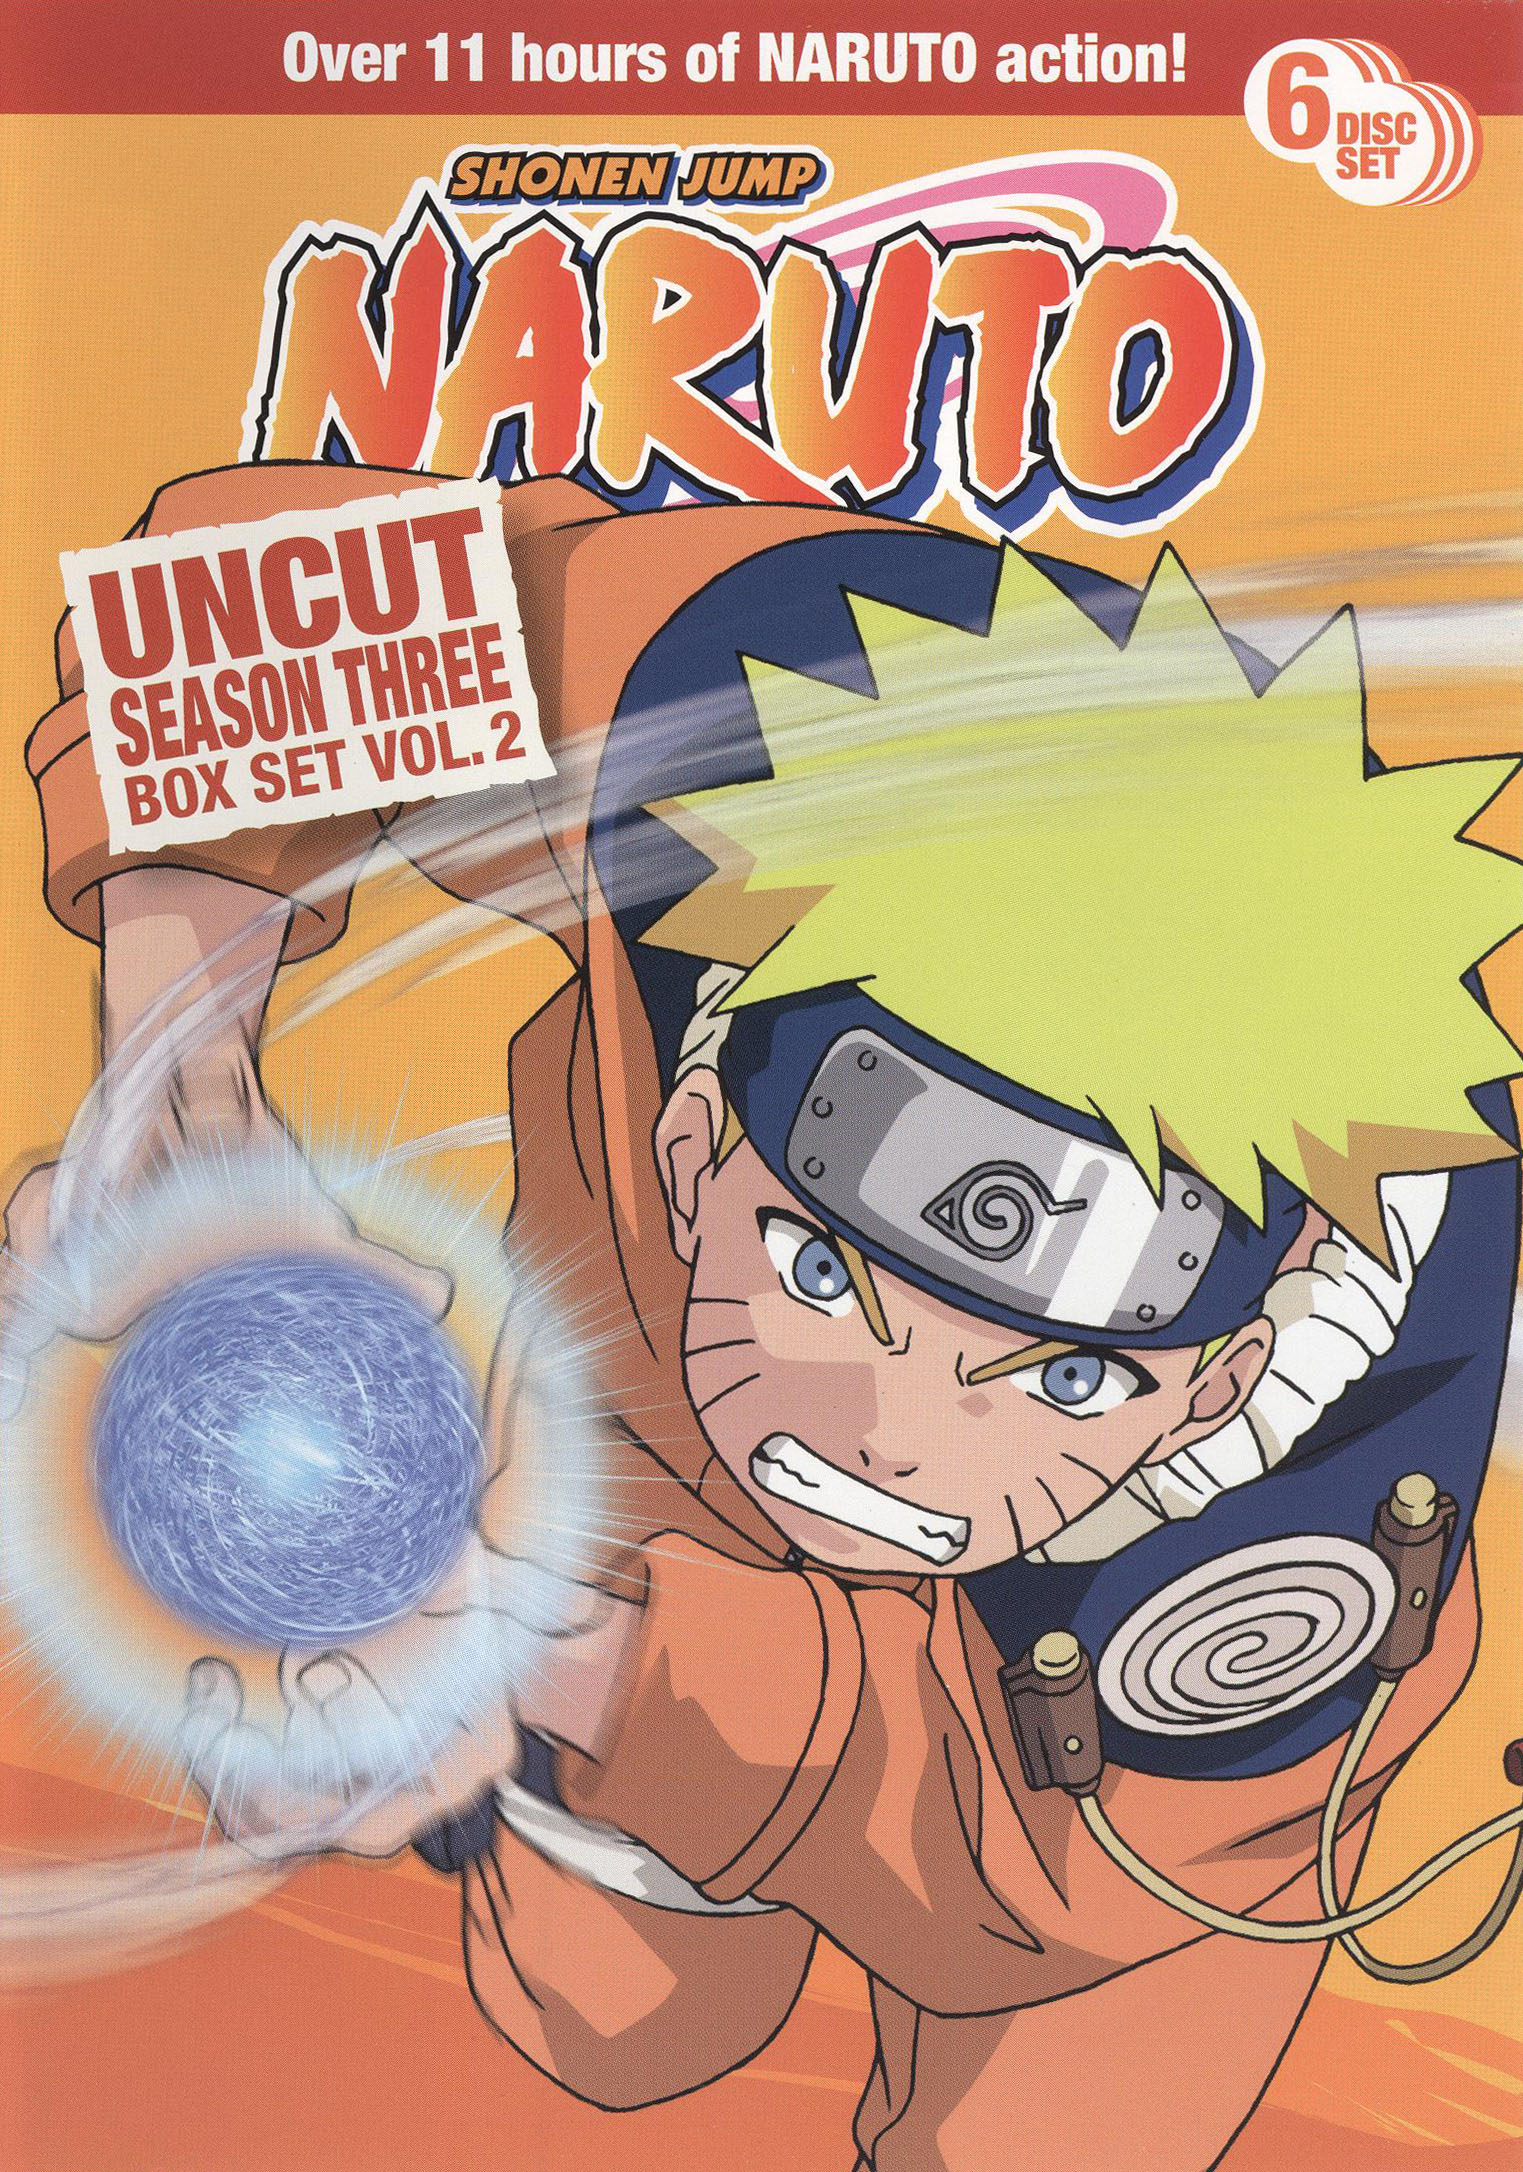 Naruto Uncut Box Set: Season 3, Vol. 2 [6 Discs] [DVD] - Best Buy